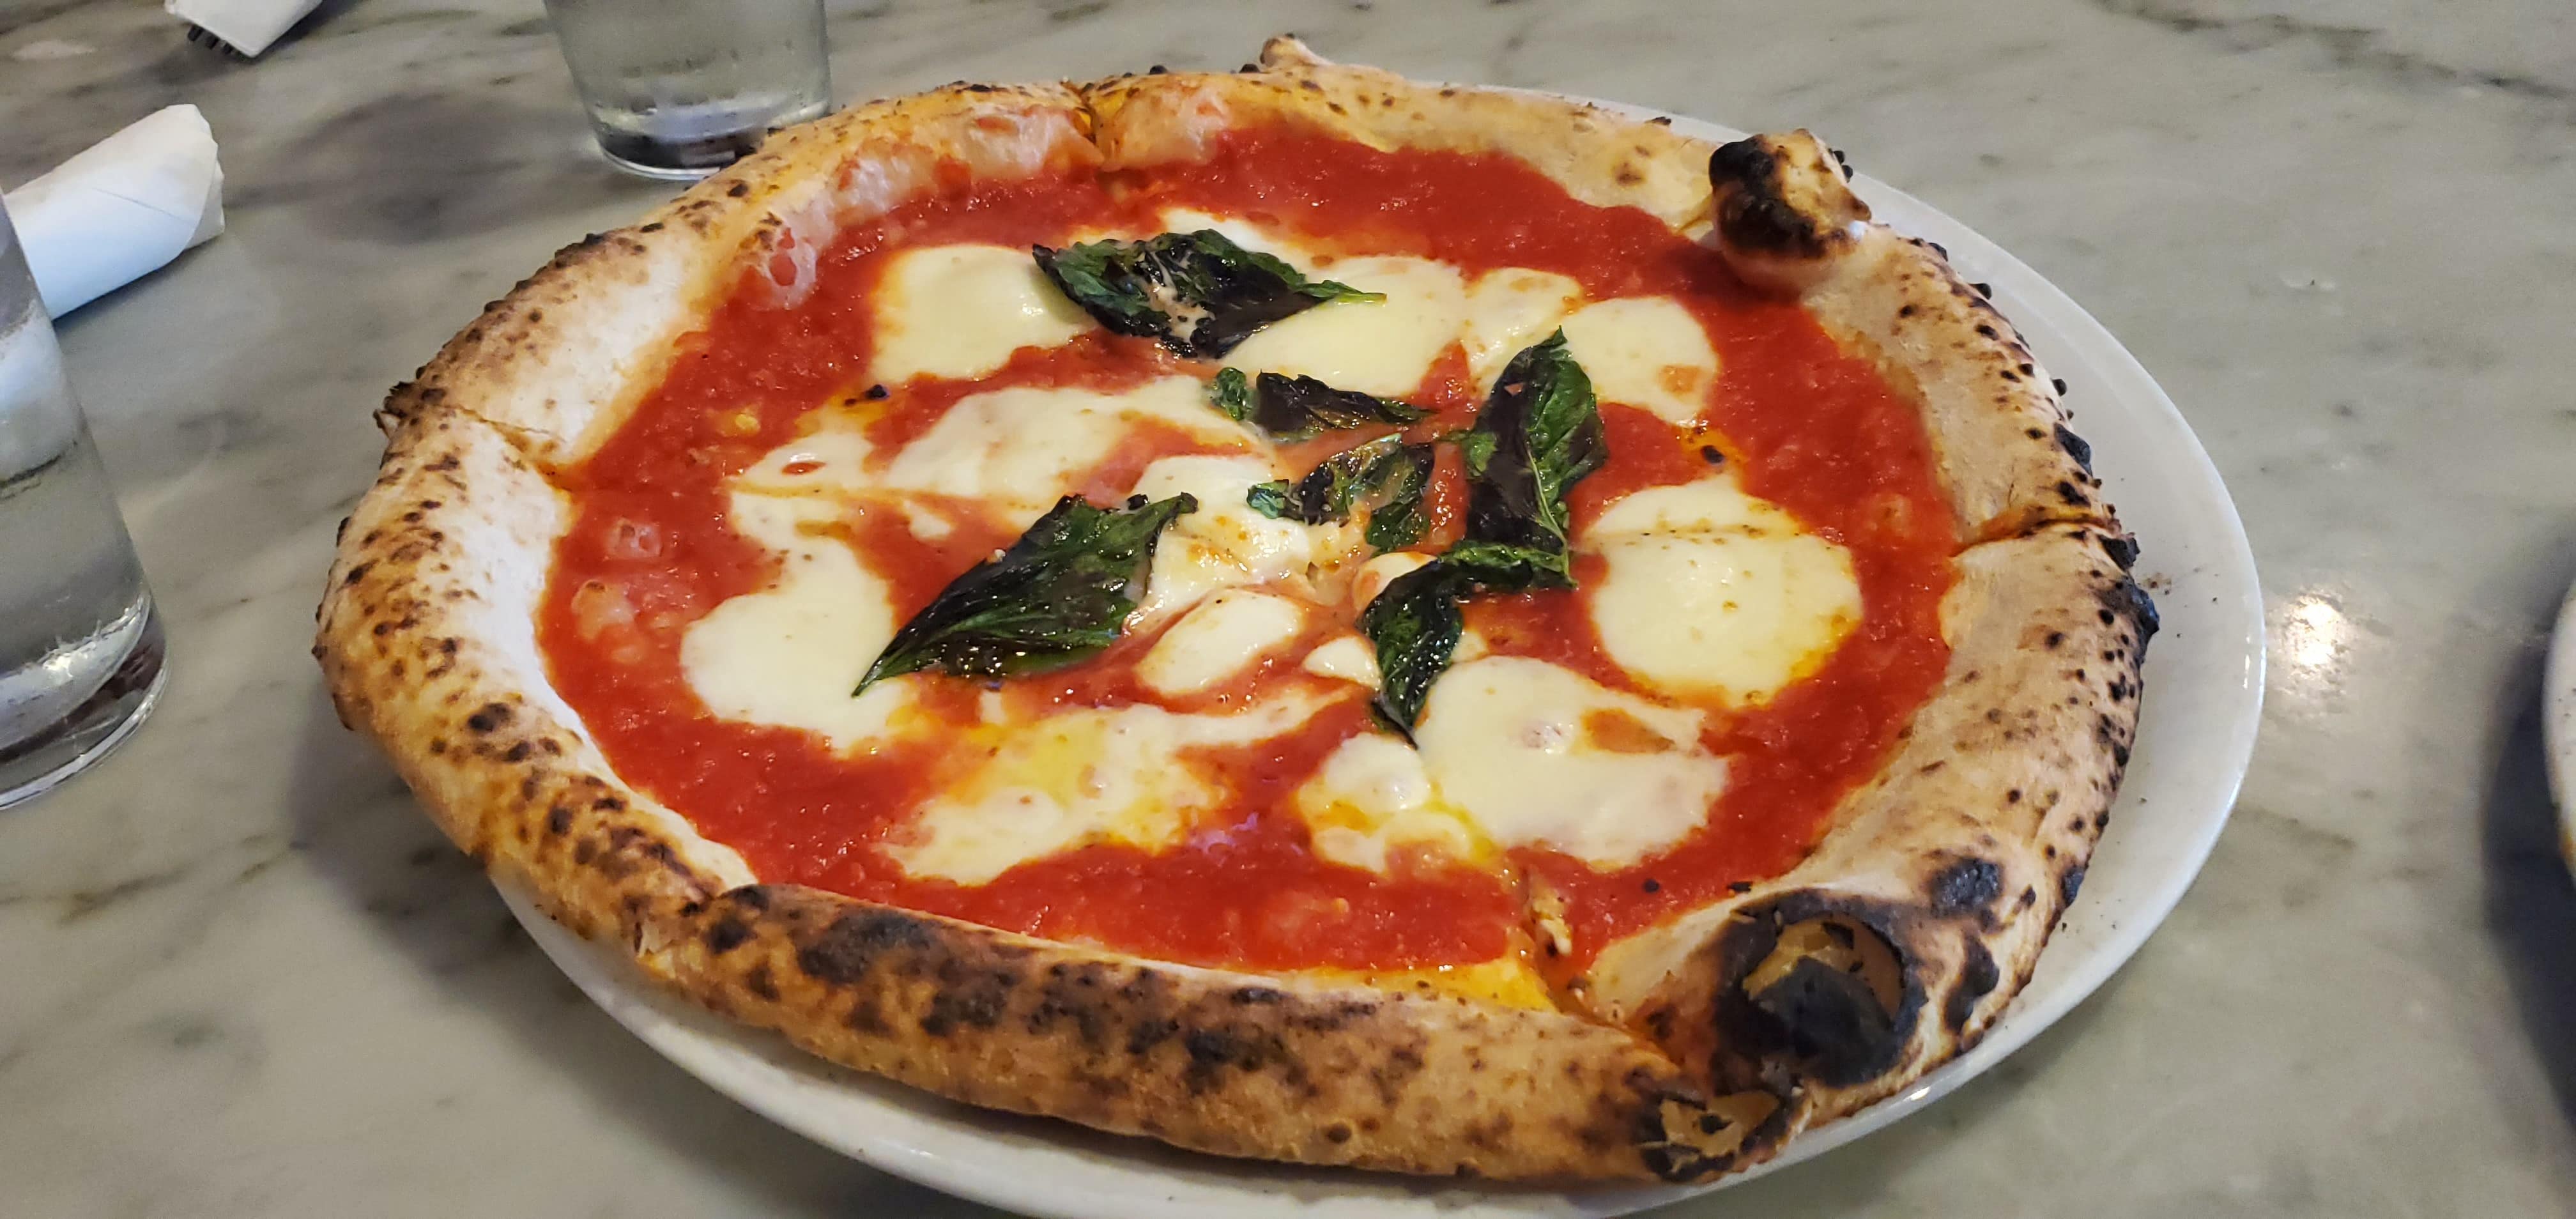 Fuoco Pizzeria Napoletana - Fullerton, CA, US, pasta places near me